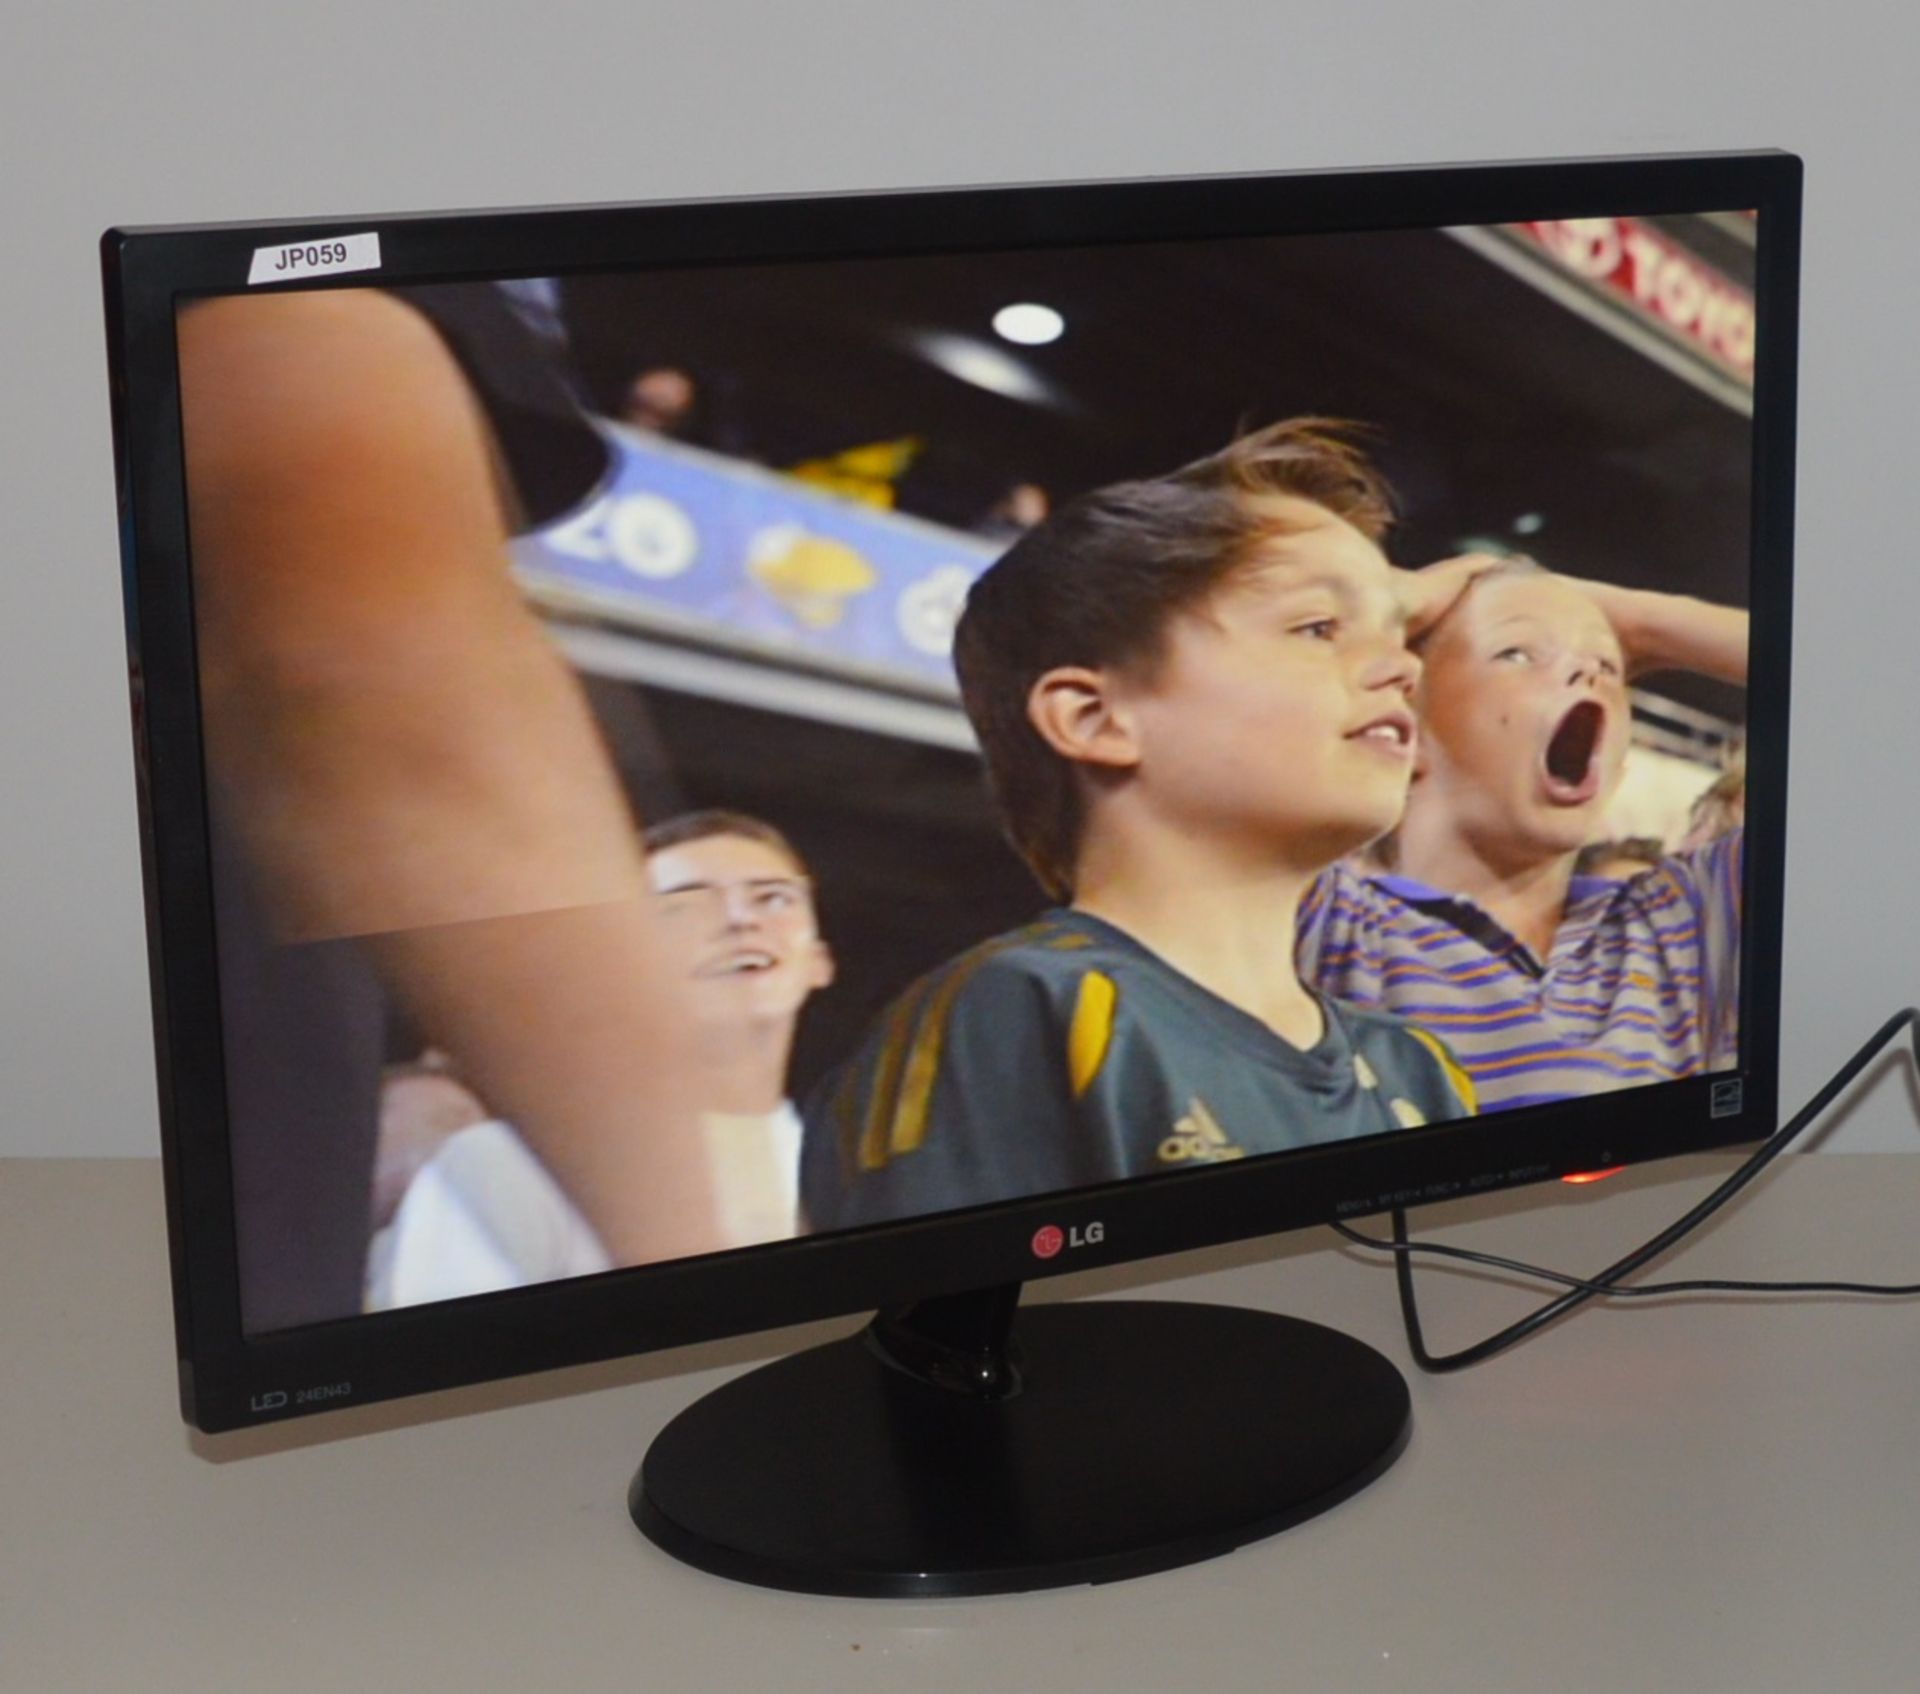 1 x LG Flat Screen LED 24 Inch Monitor - 1920x1080 Resolution - HDMI Connection - Full HD Ready -